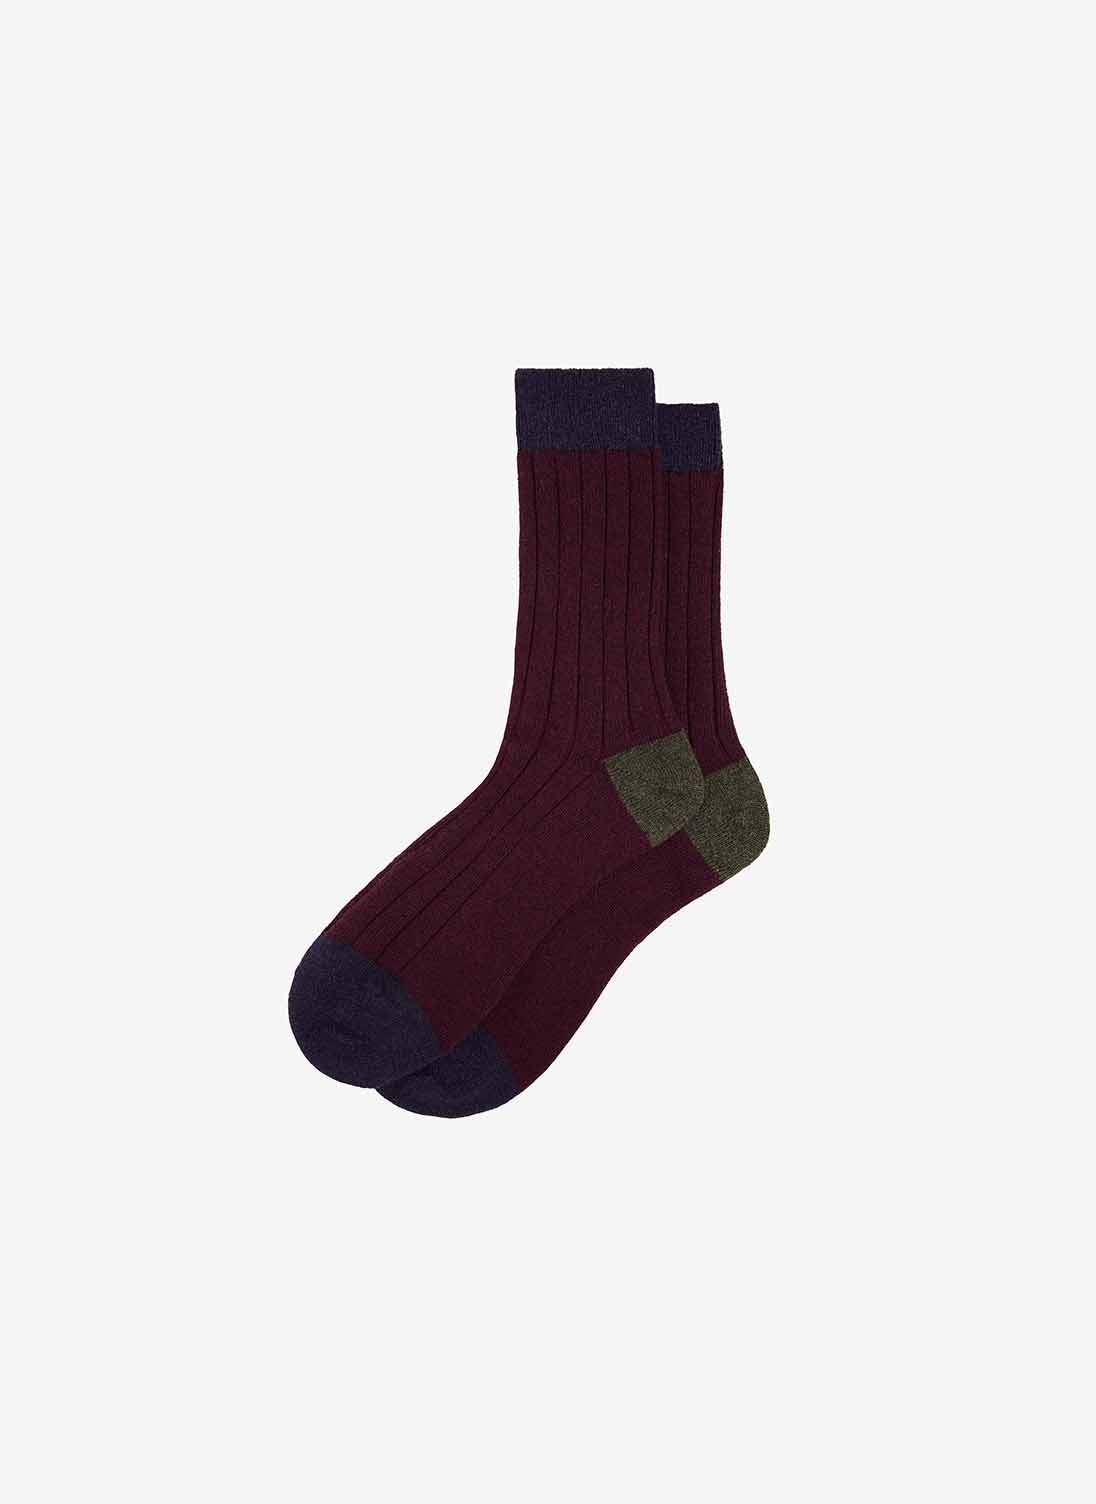 Men's Cashmere Patch Socks Oxblood